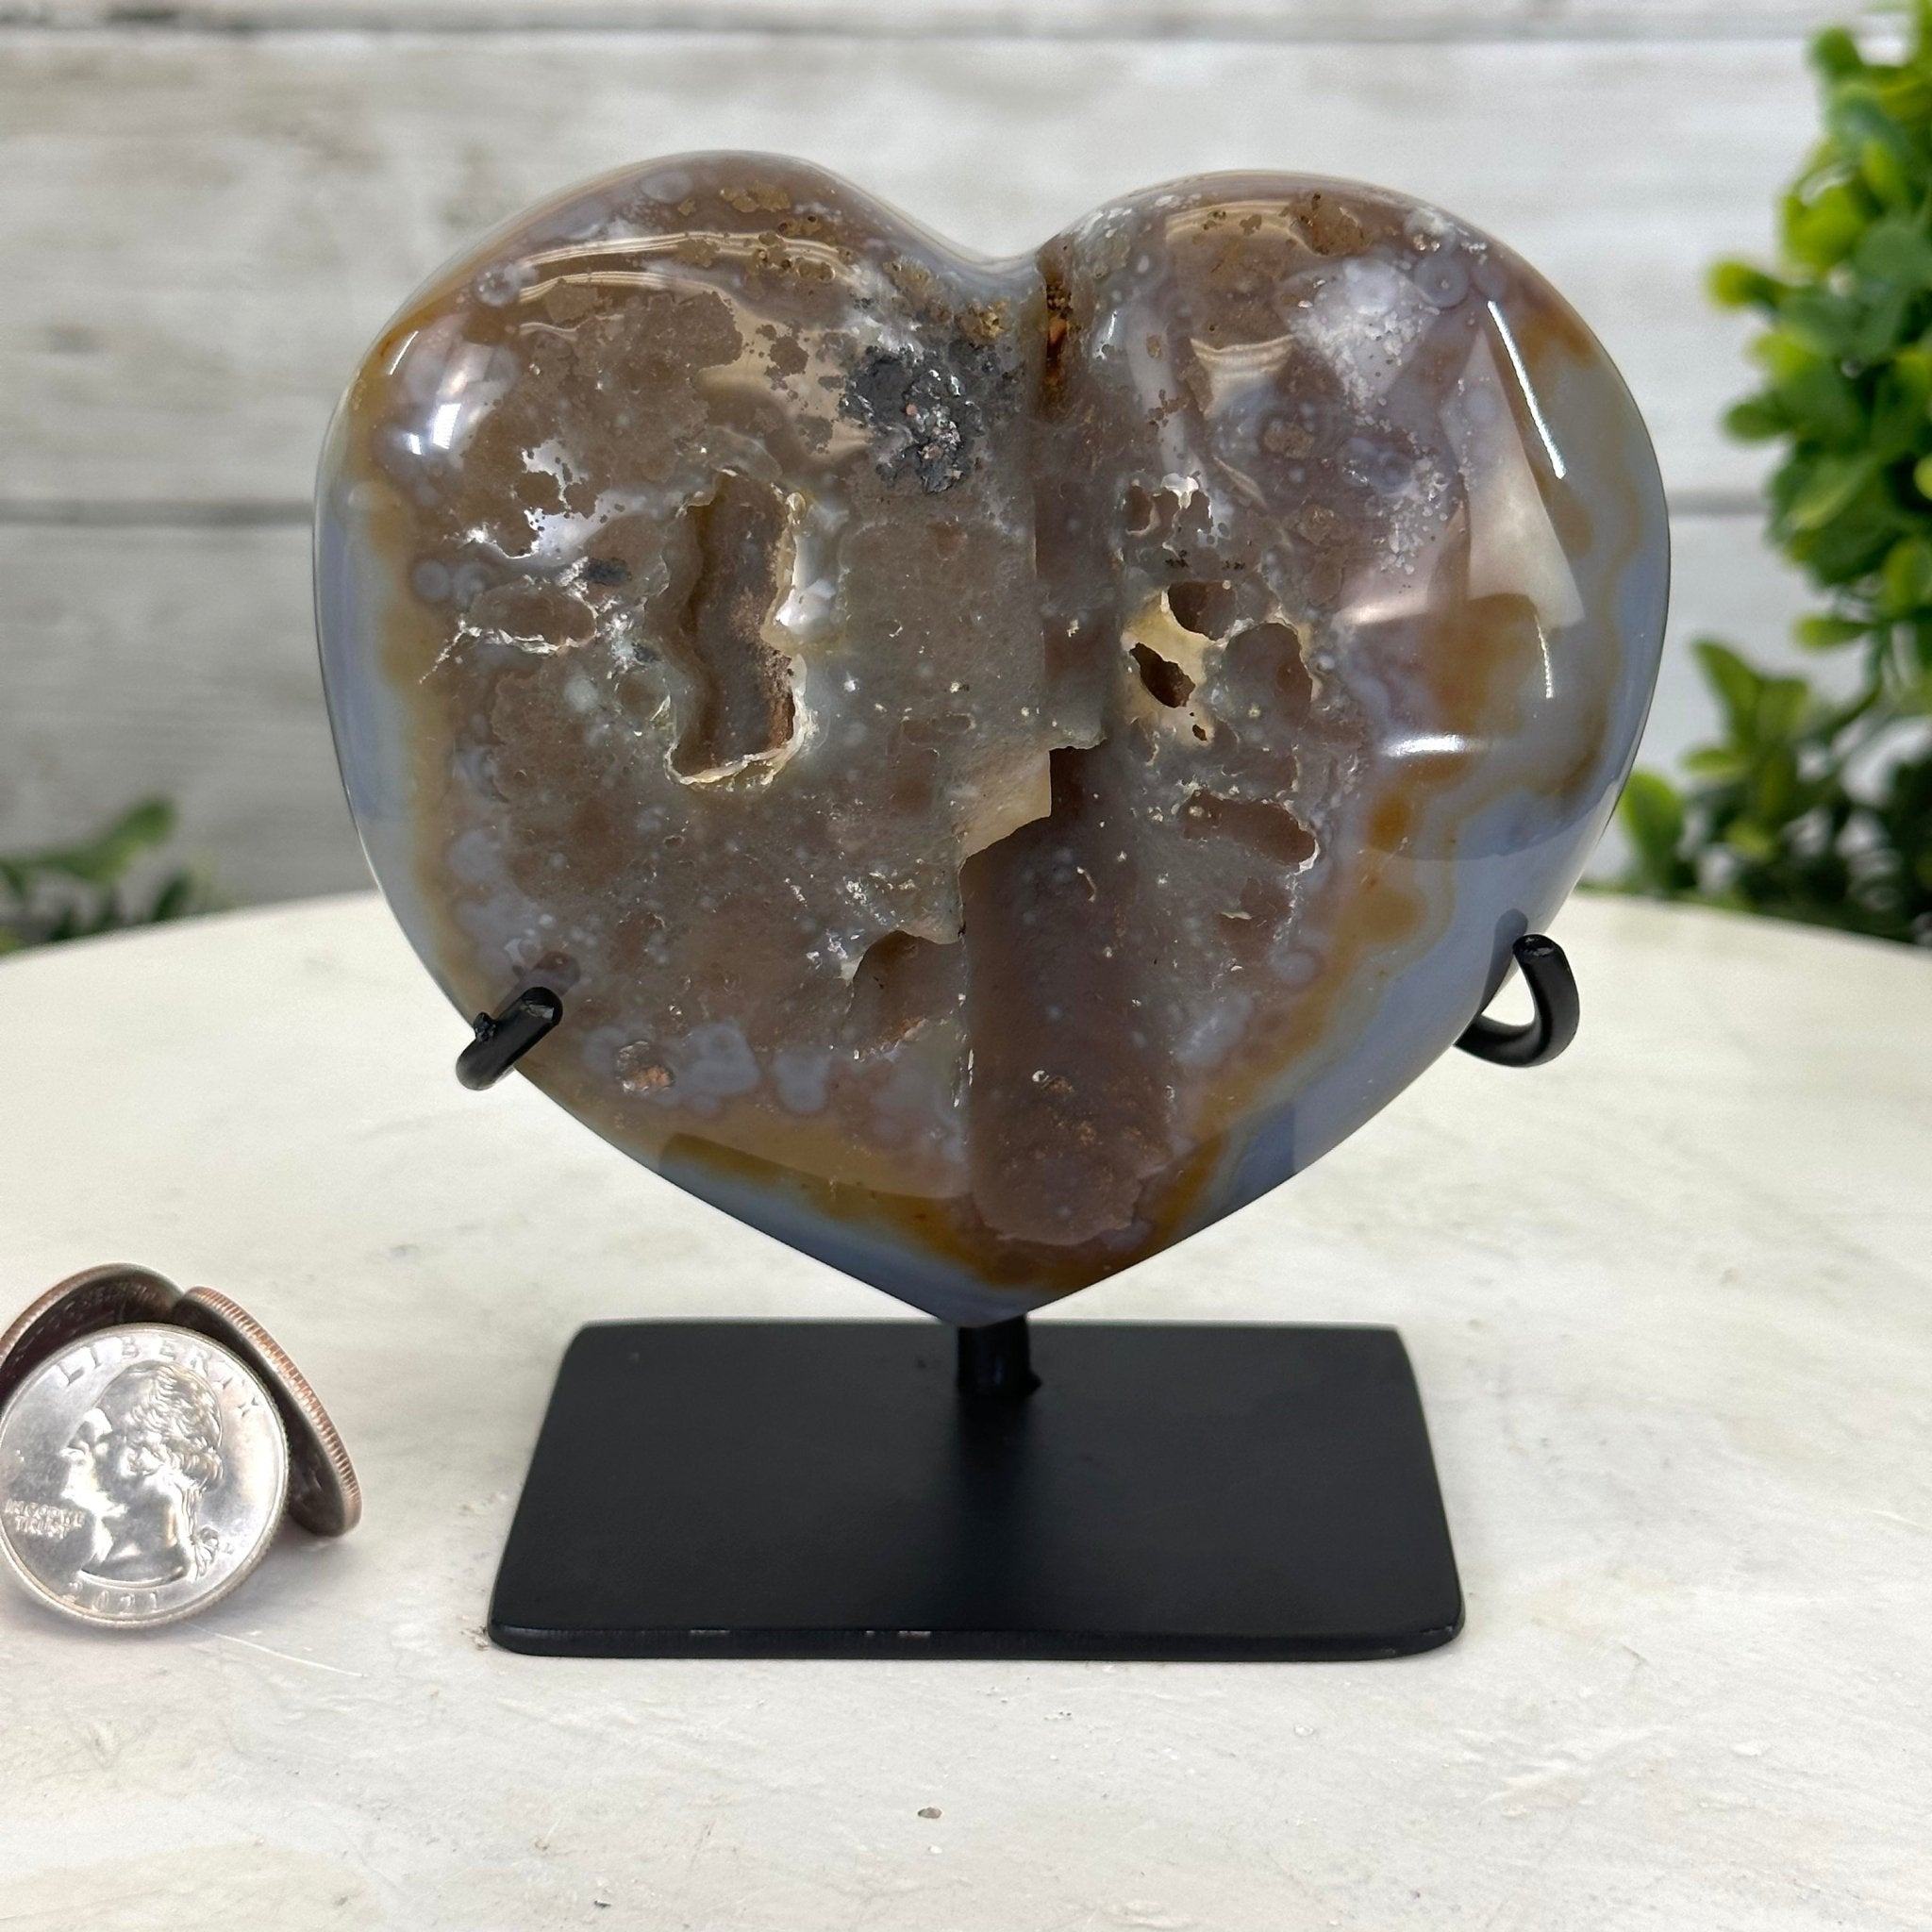 Polished Agate Heart Geode on a Metal Stand, 1.4 lbs & 4.4" Tall, Model #5468-0023 by Brazil Gems - Brazil GemsBrazil GemsPolished Agate Heart Geode on a Metal Stand, 1.4 lbs & 4.4" Tall, Model #5468-0023 by Brazil GemsHearts5468-0023